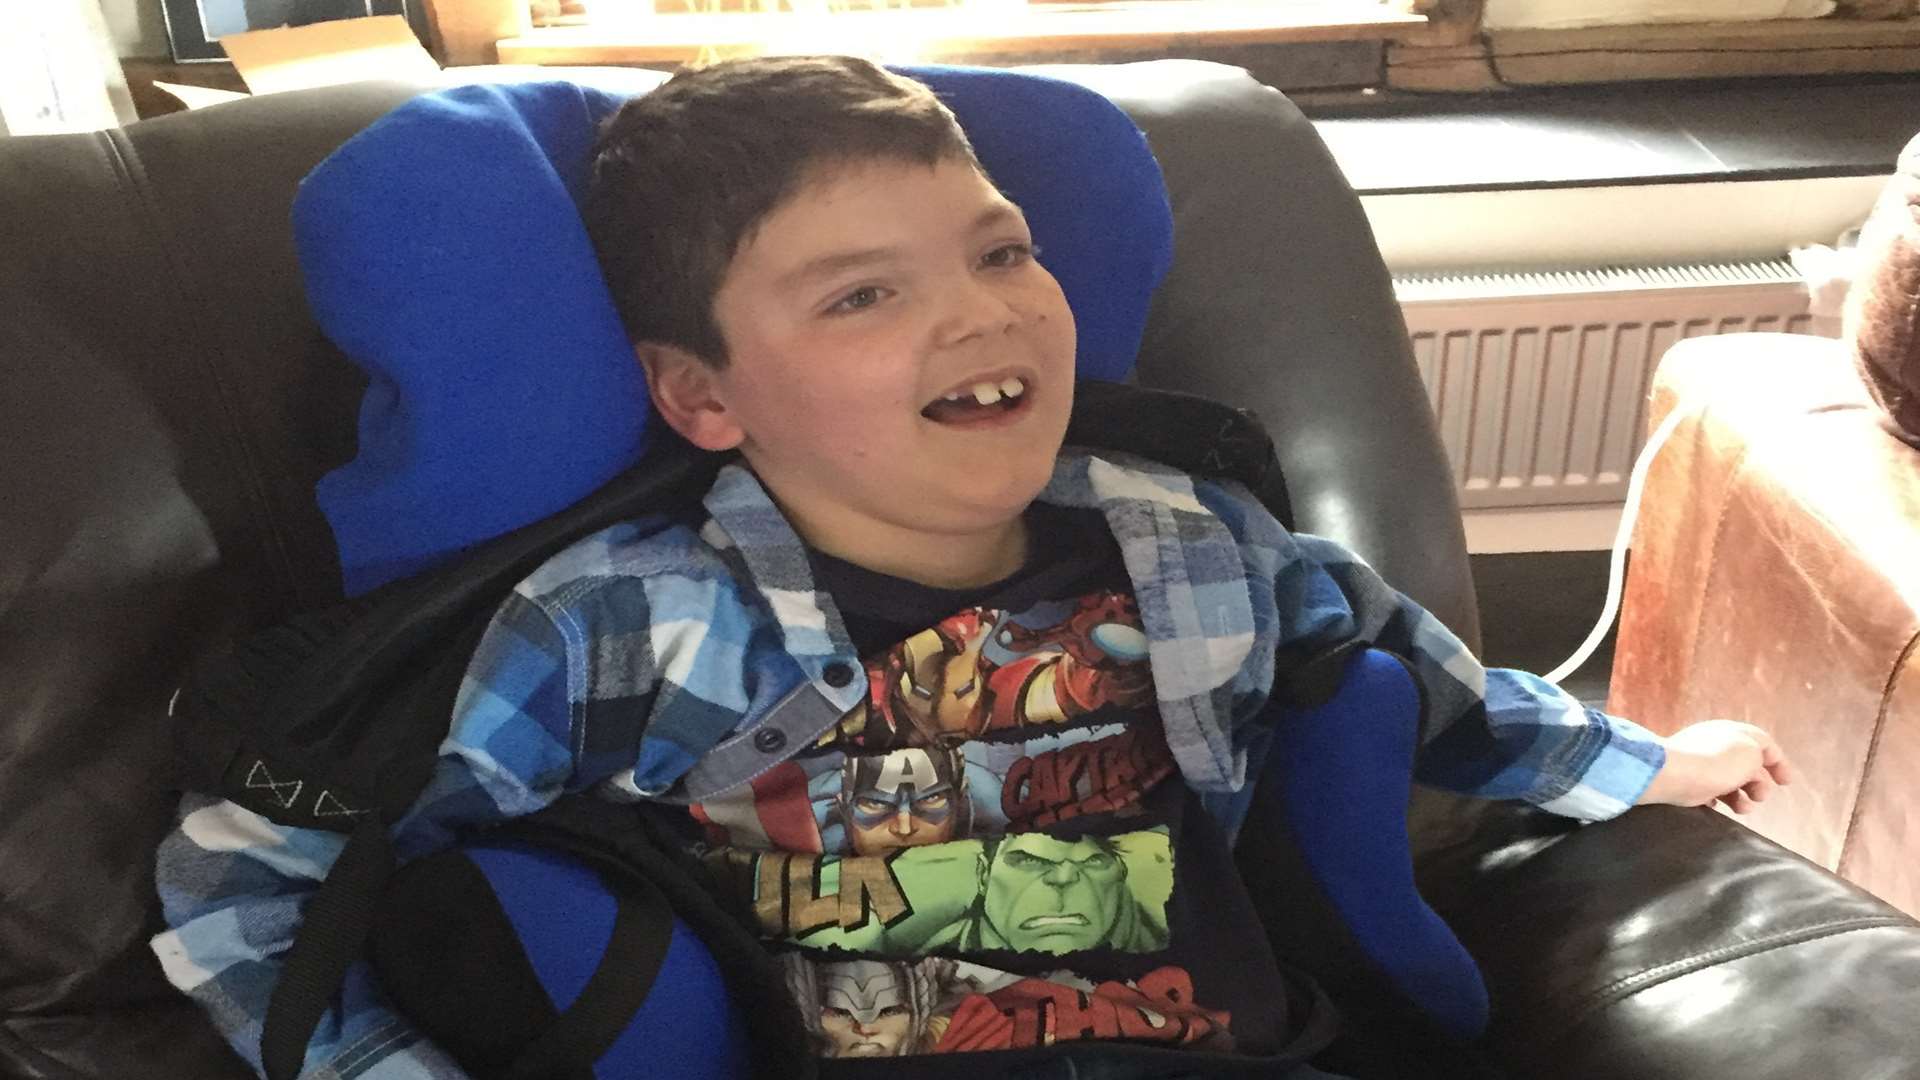 Jacob Stratton has cerebral palsy and quadriplegia